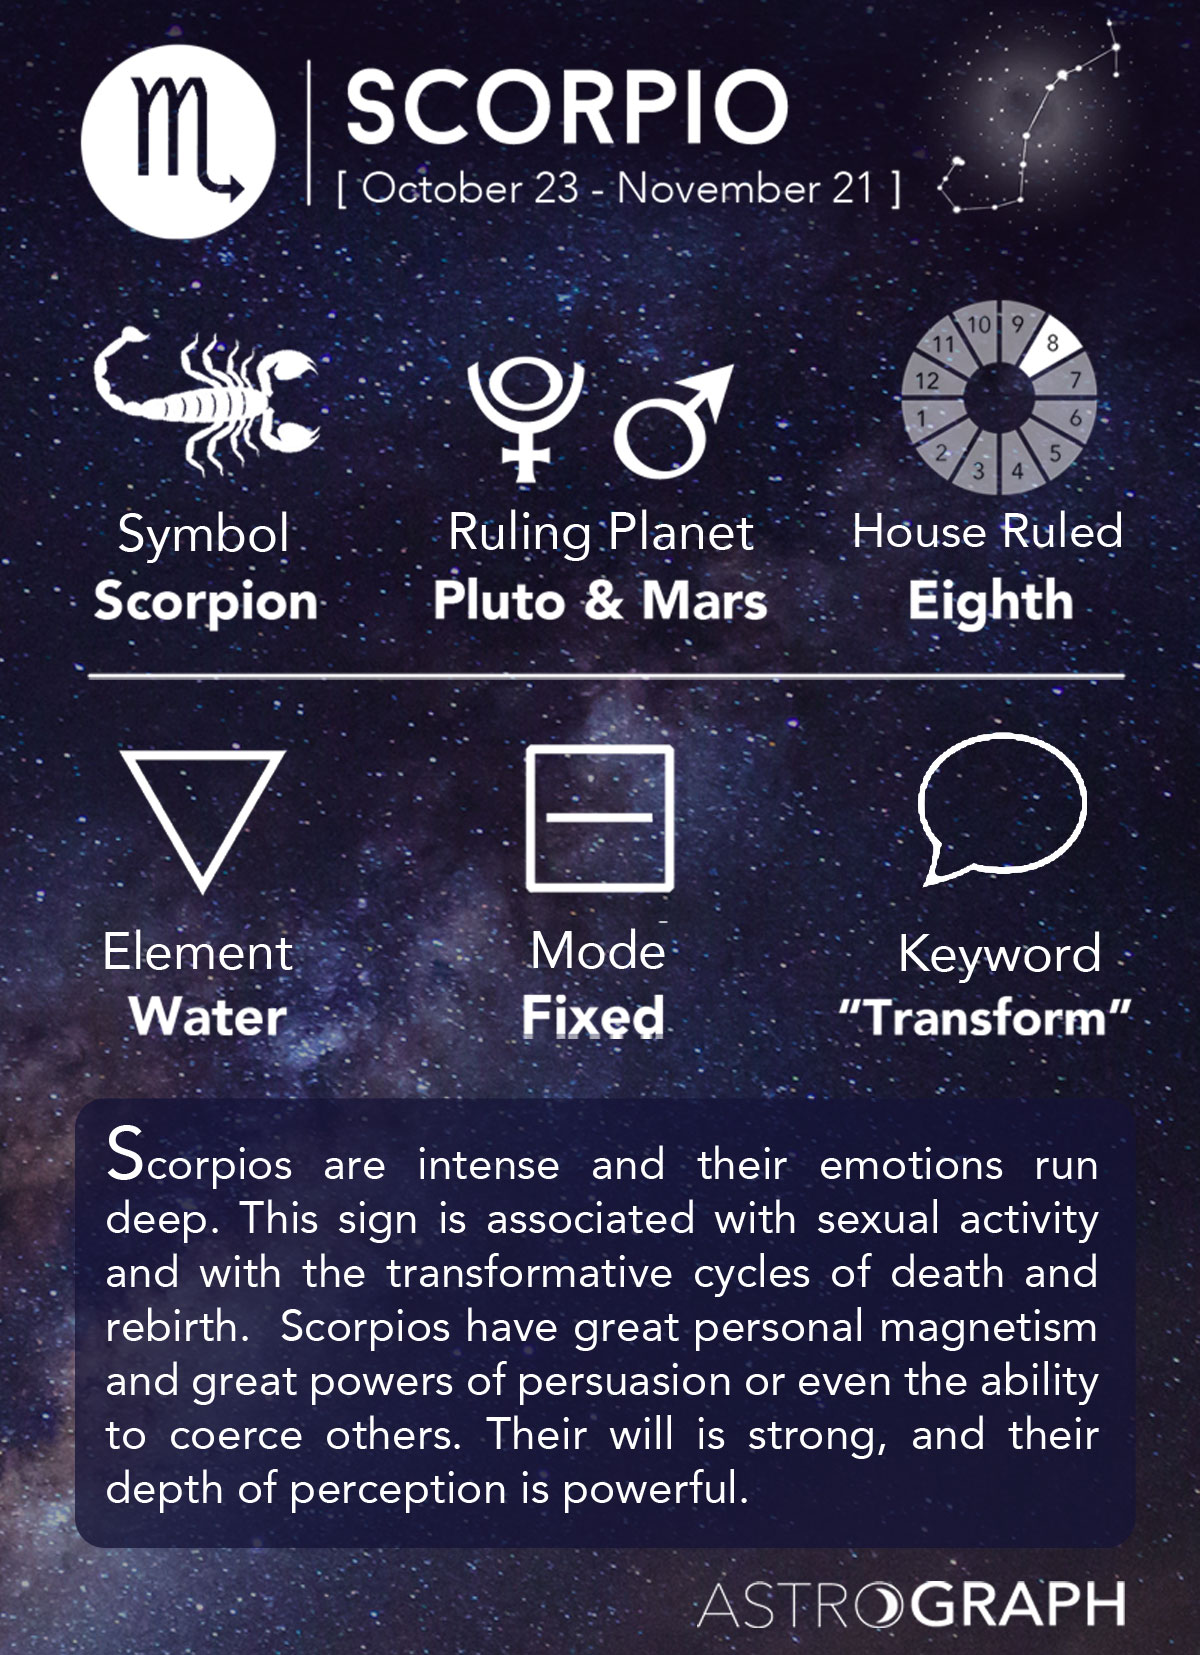 Quels signes Scorpion a-t-il?